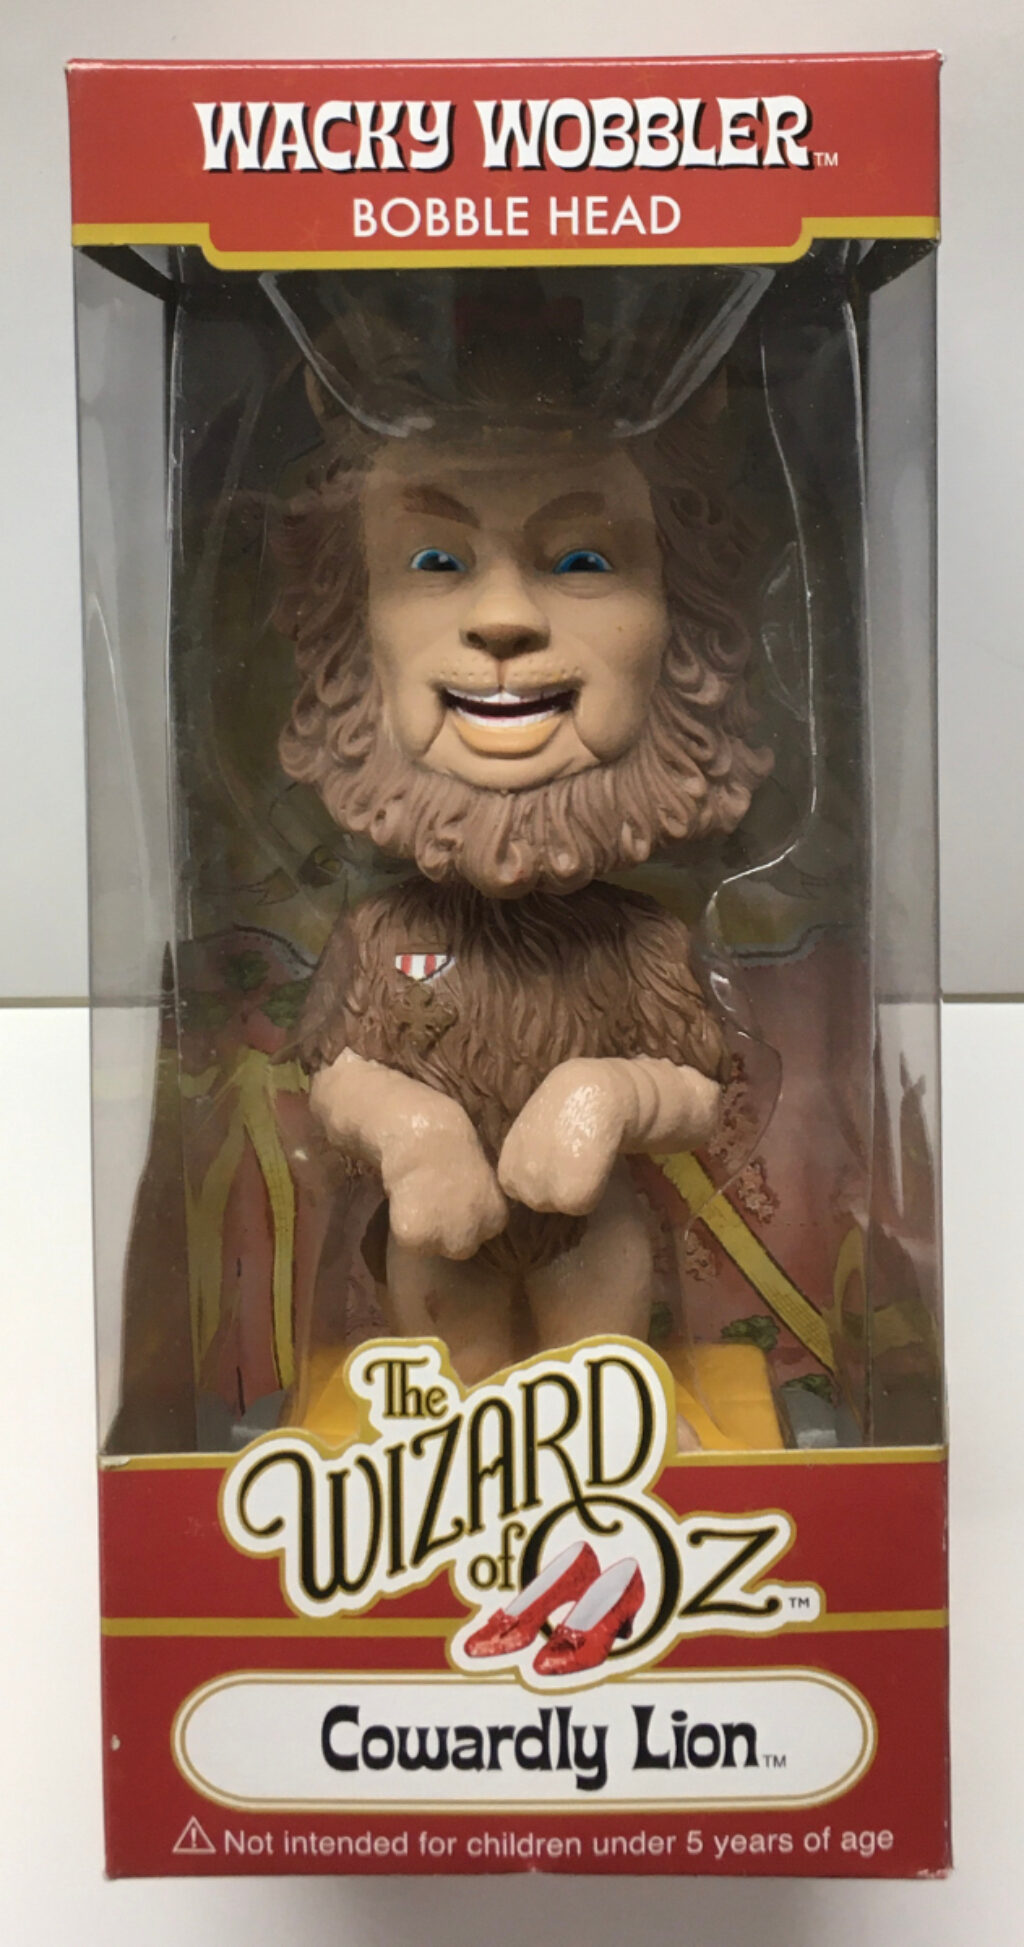 Wizard of Oz Cowardly Lion Wacky Wobbler Bobblehead from Funko